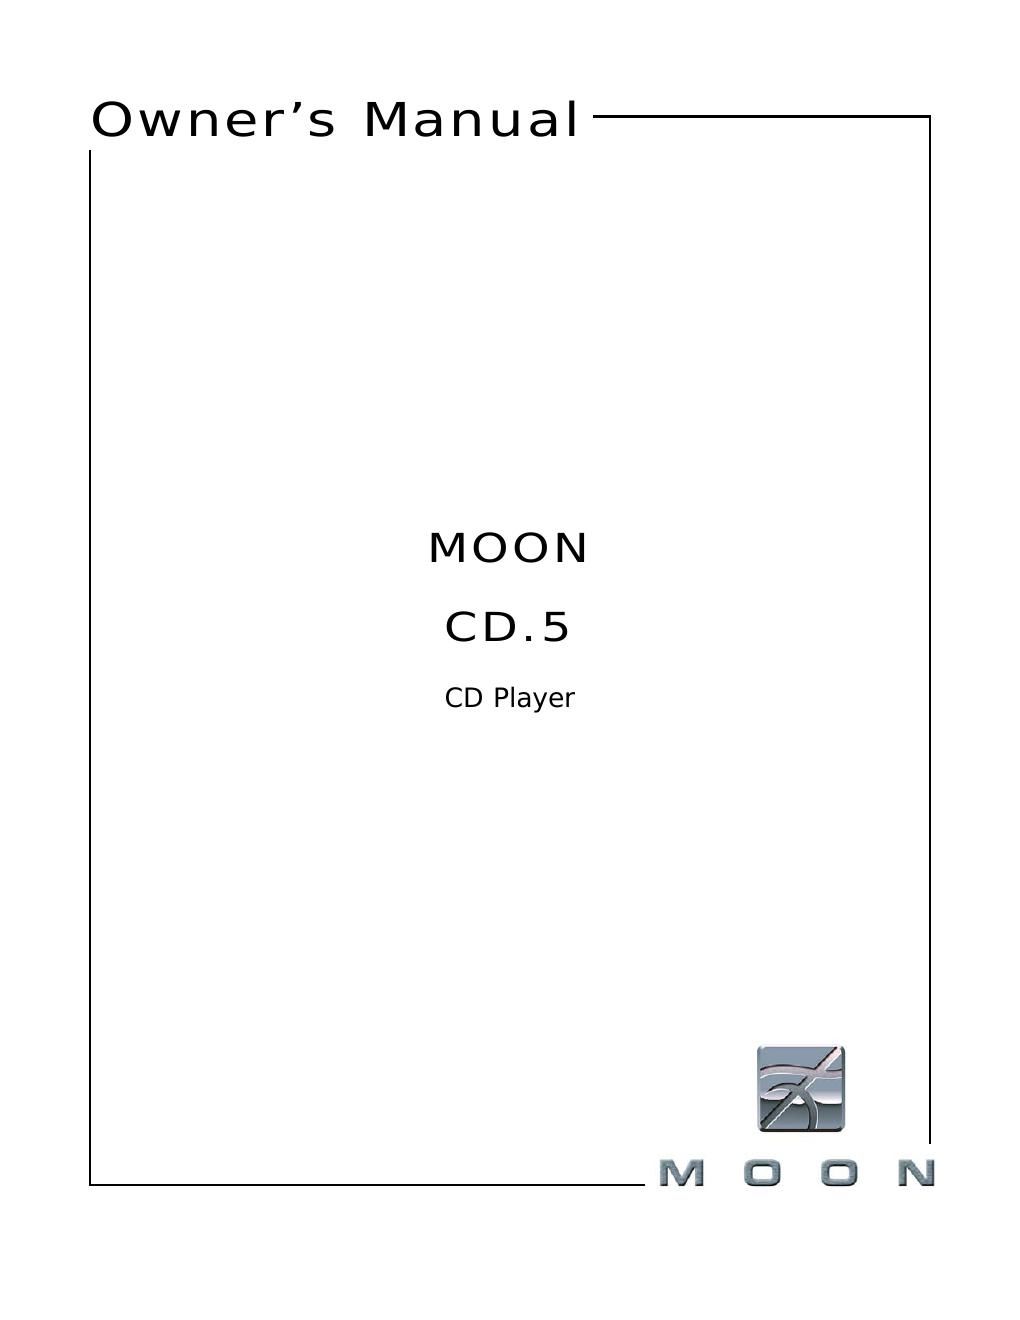 moon cd 5 owners manual